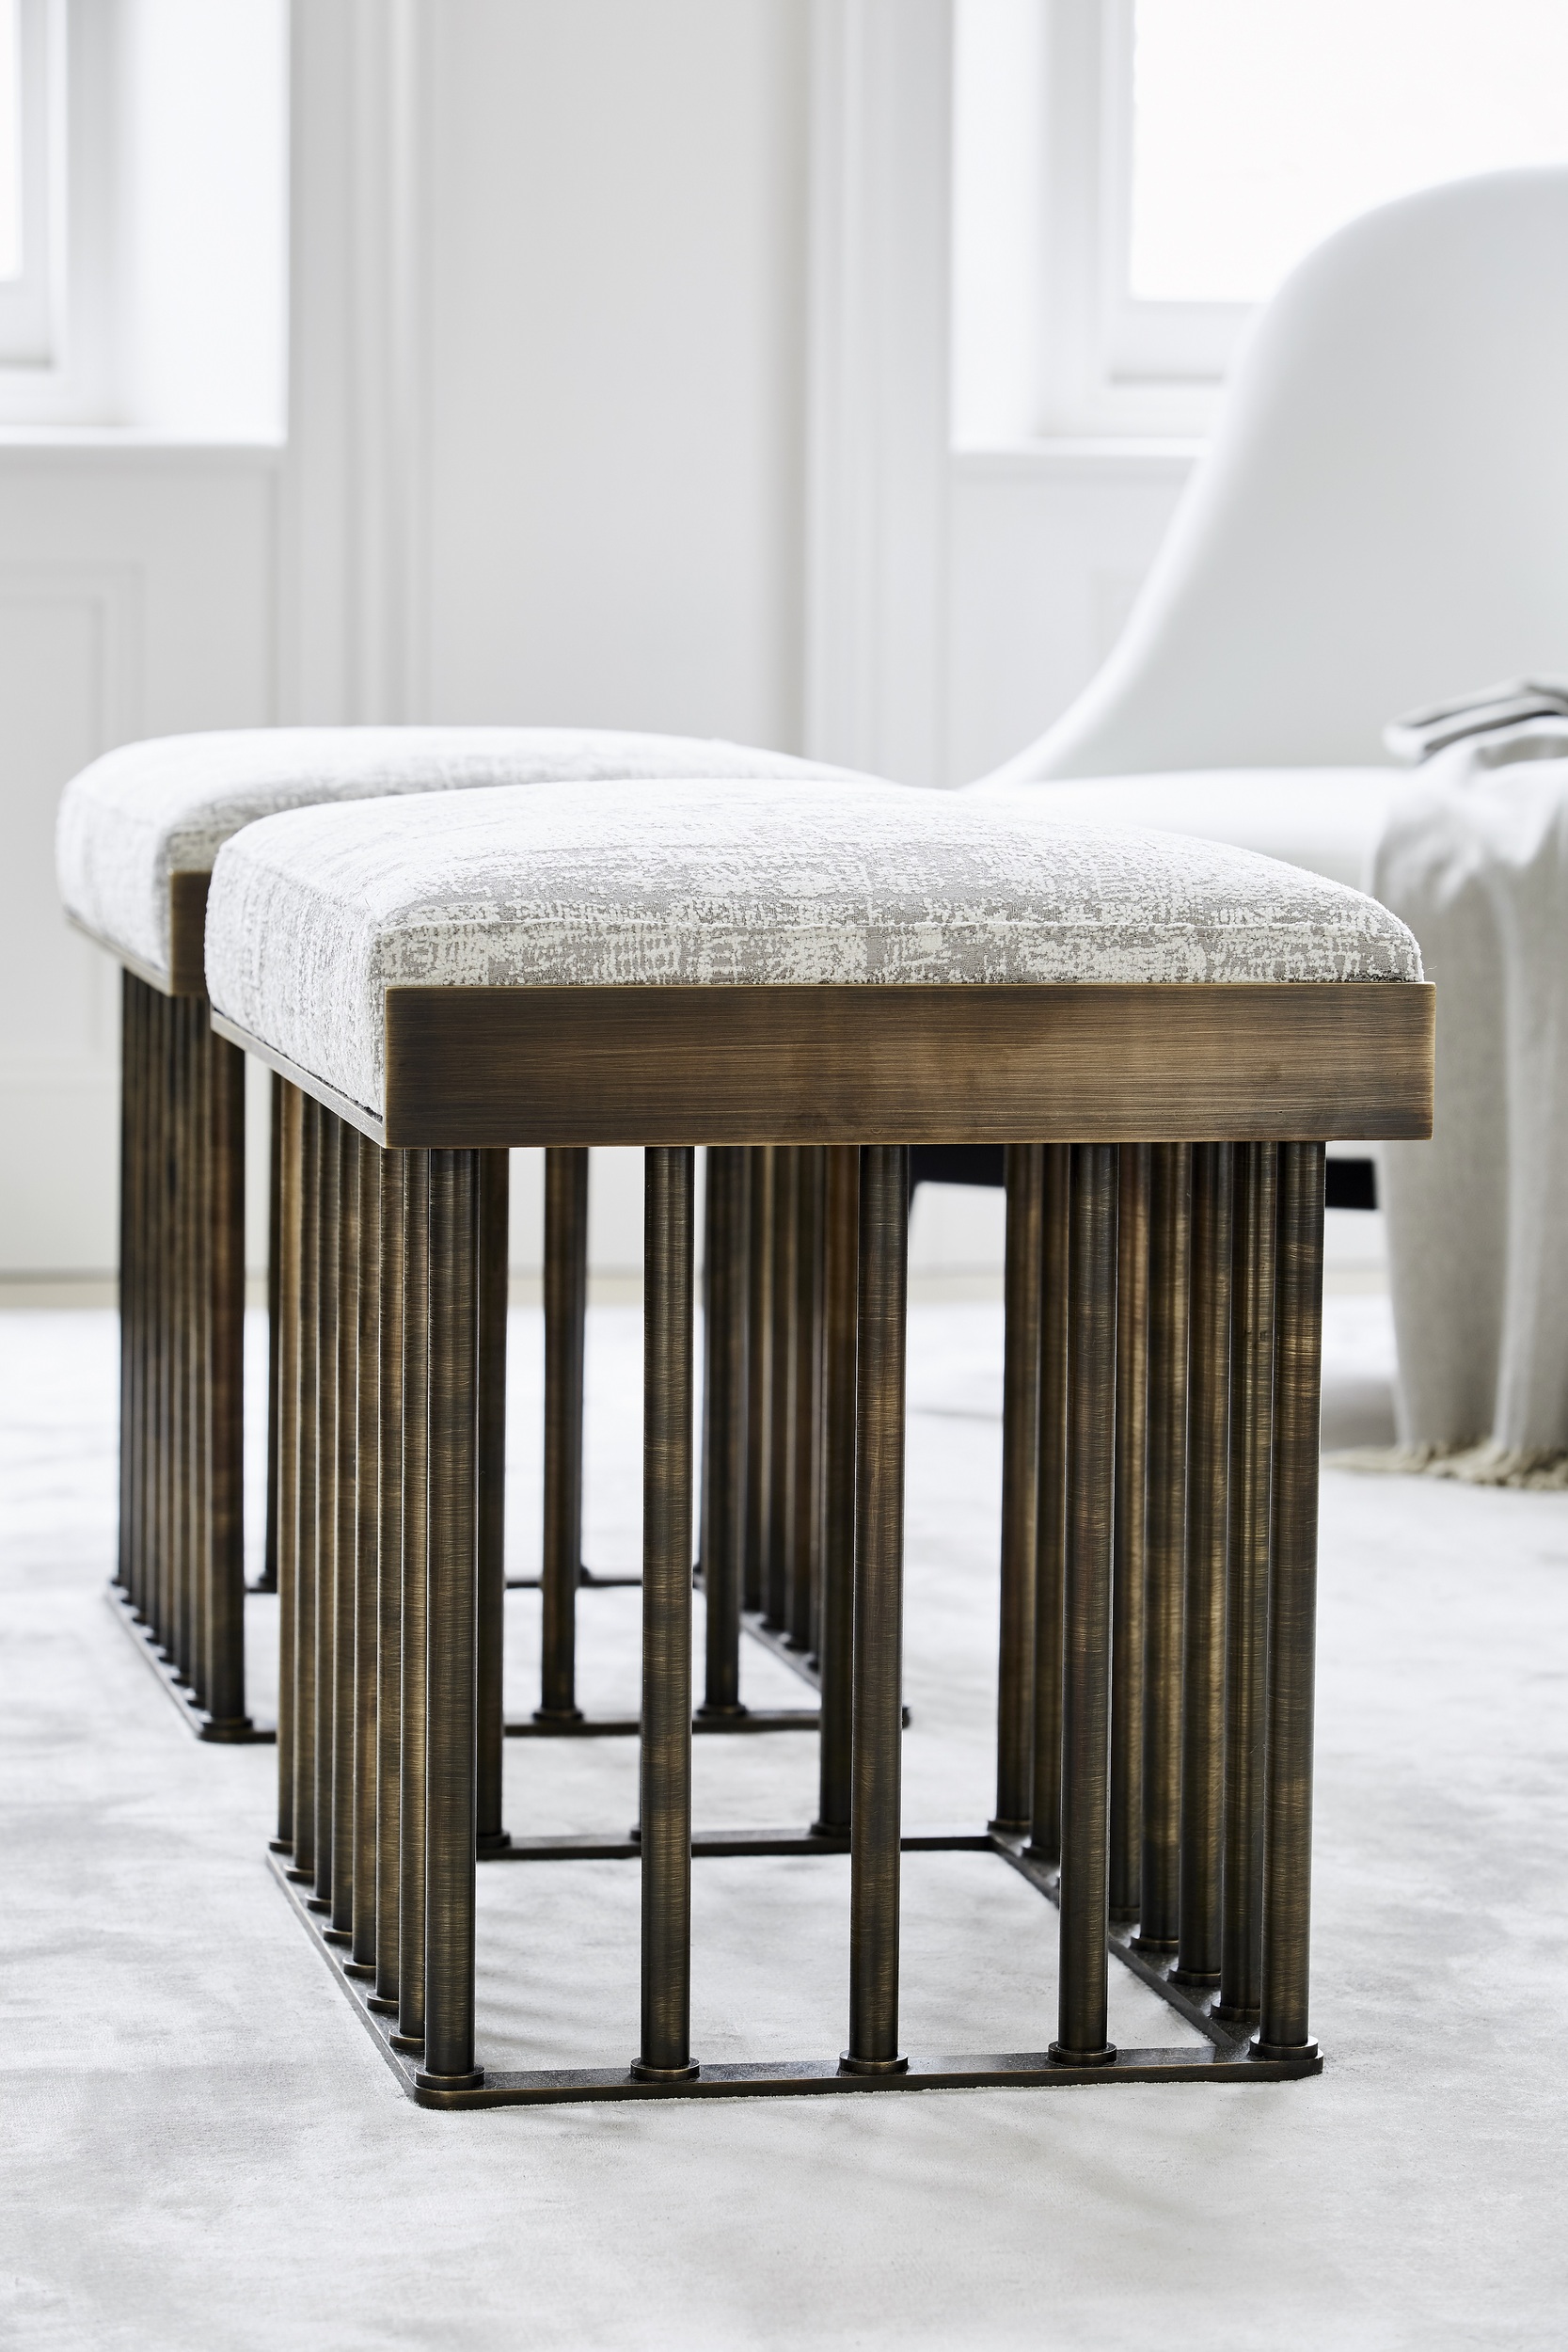 Two stylish wooden cushioned stools